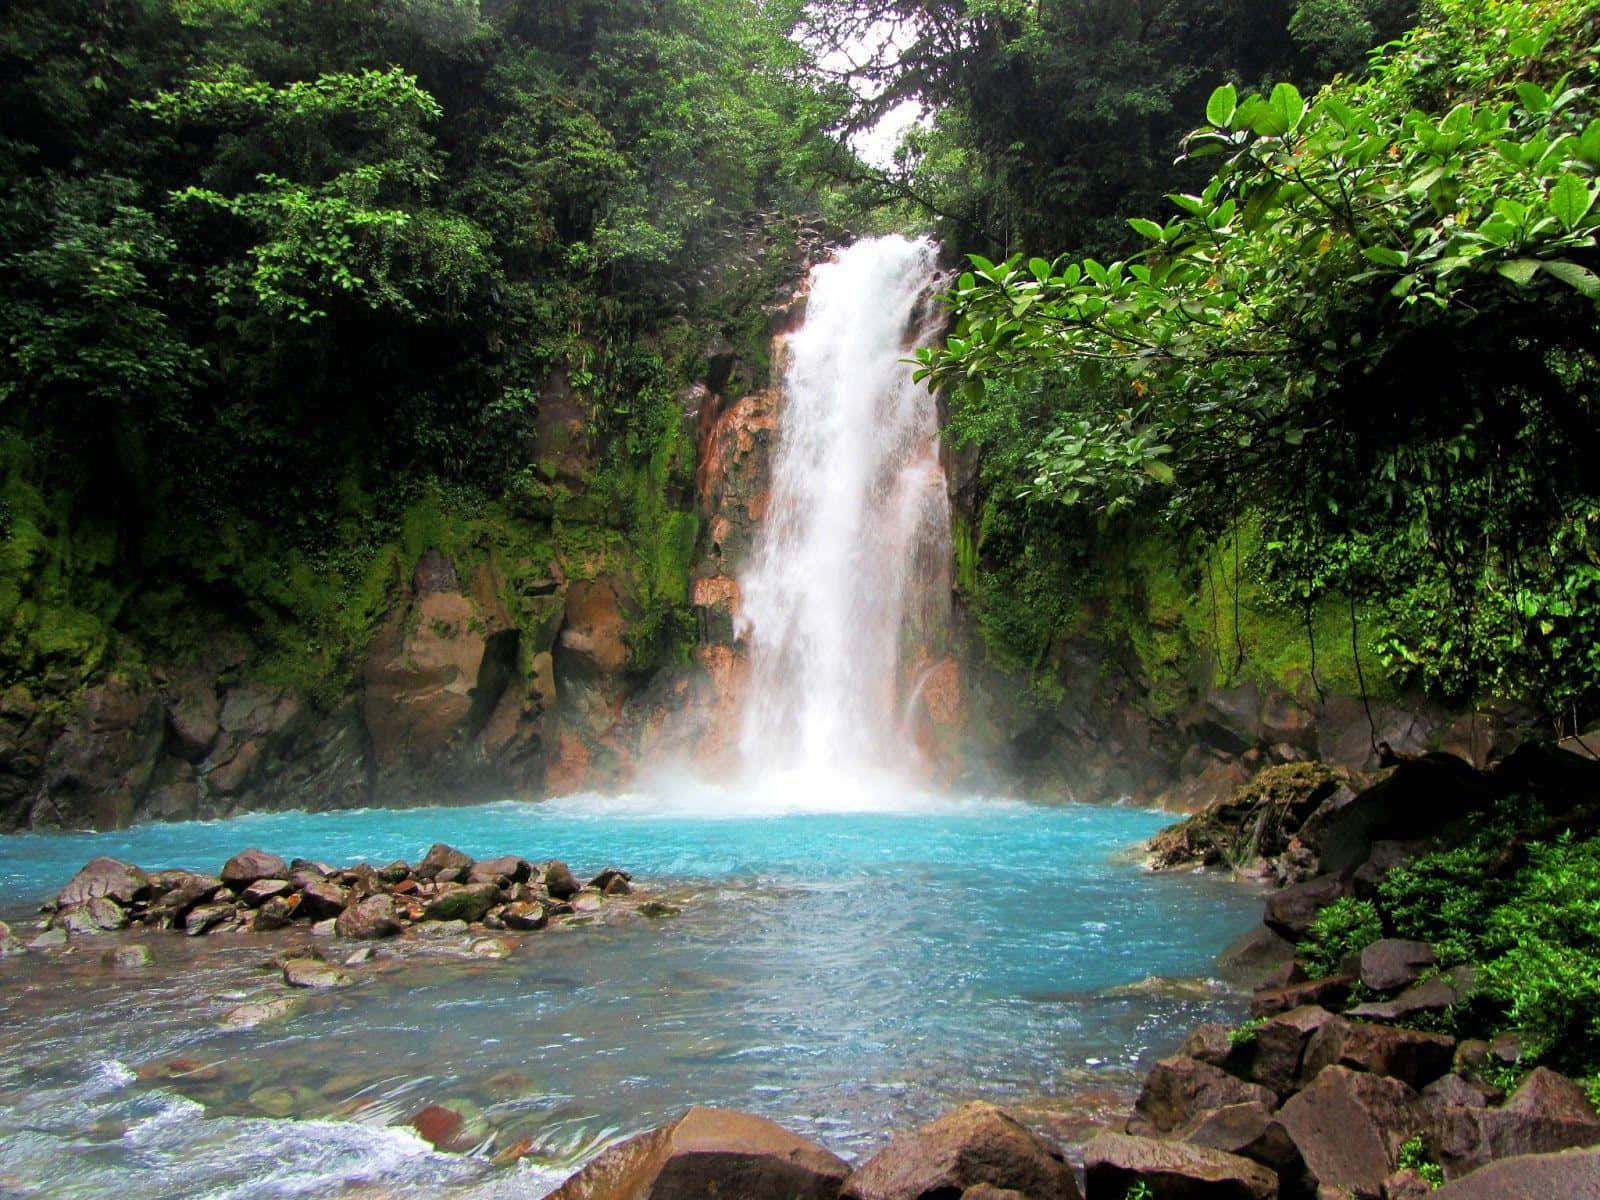 Enjoying Paradise in Costa Rica